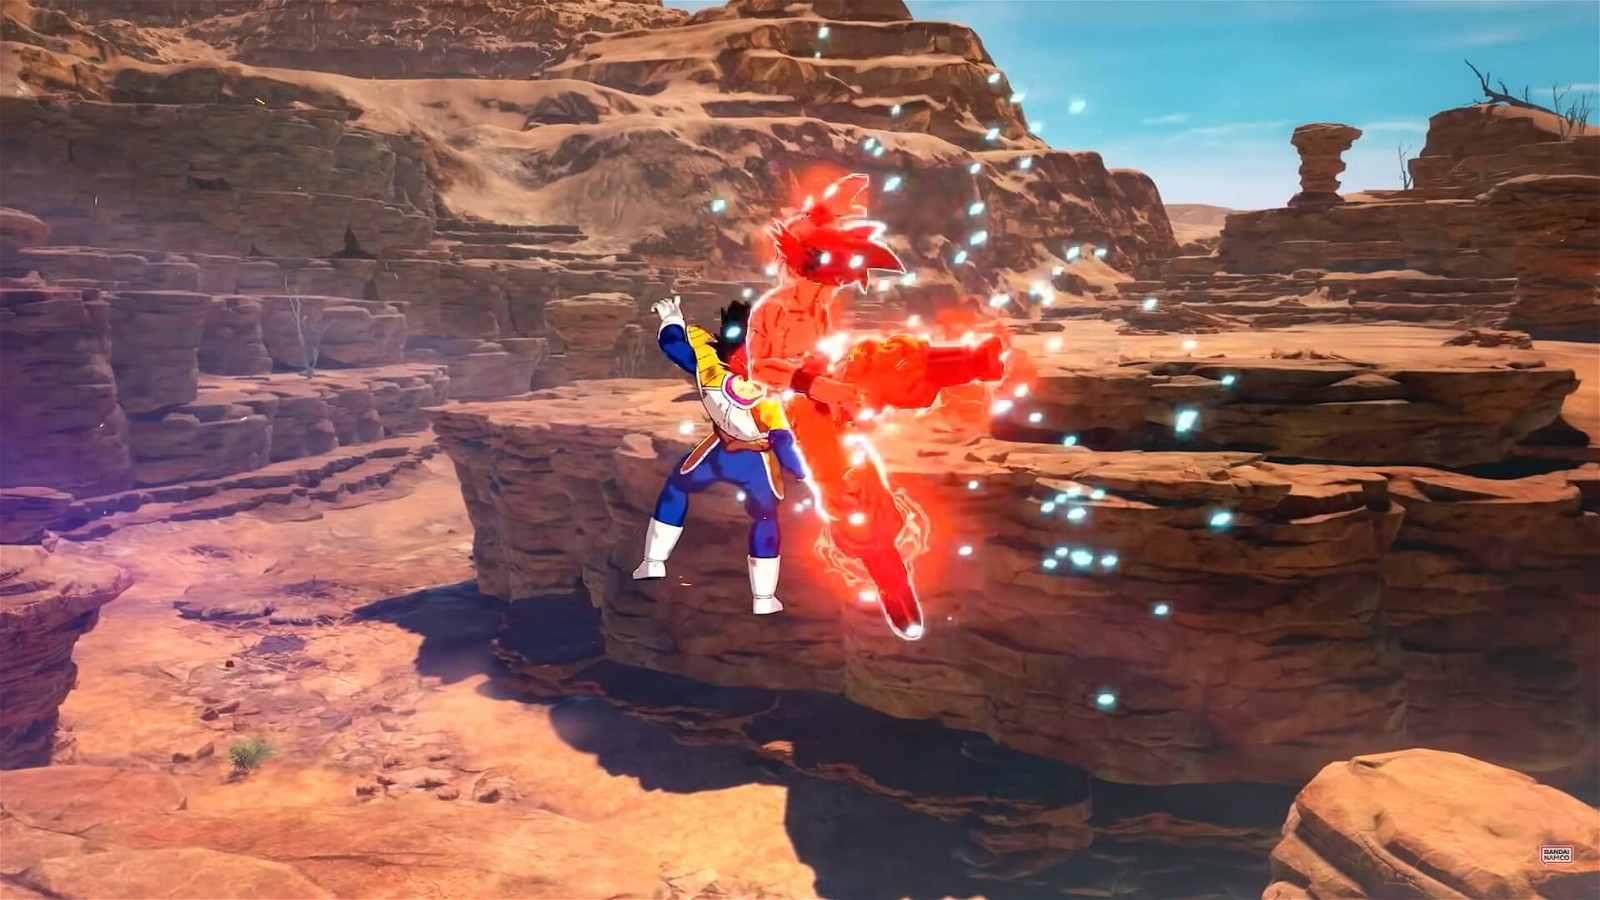 Goku using Kaio-Ken technique against Vegeta in Dragon Ball: Sparking Zero. Credits: Bandai Namco